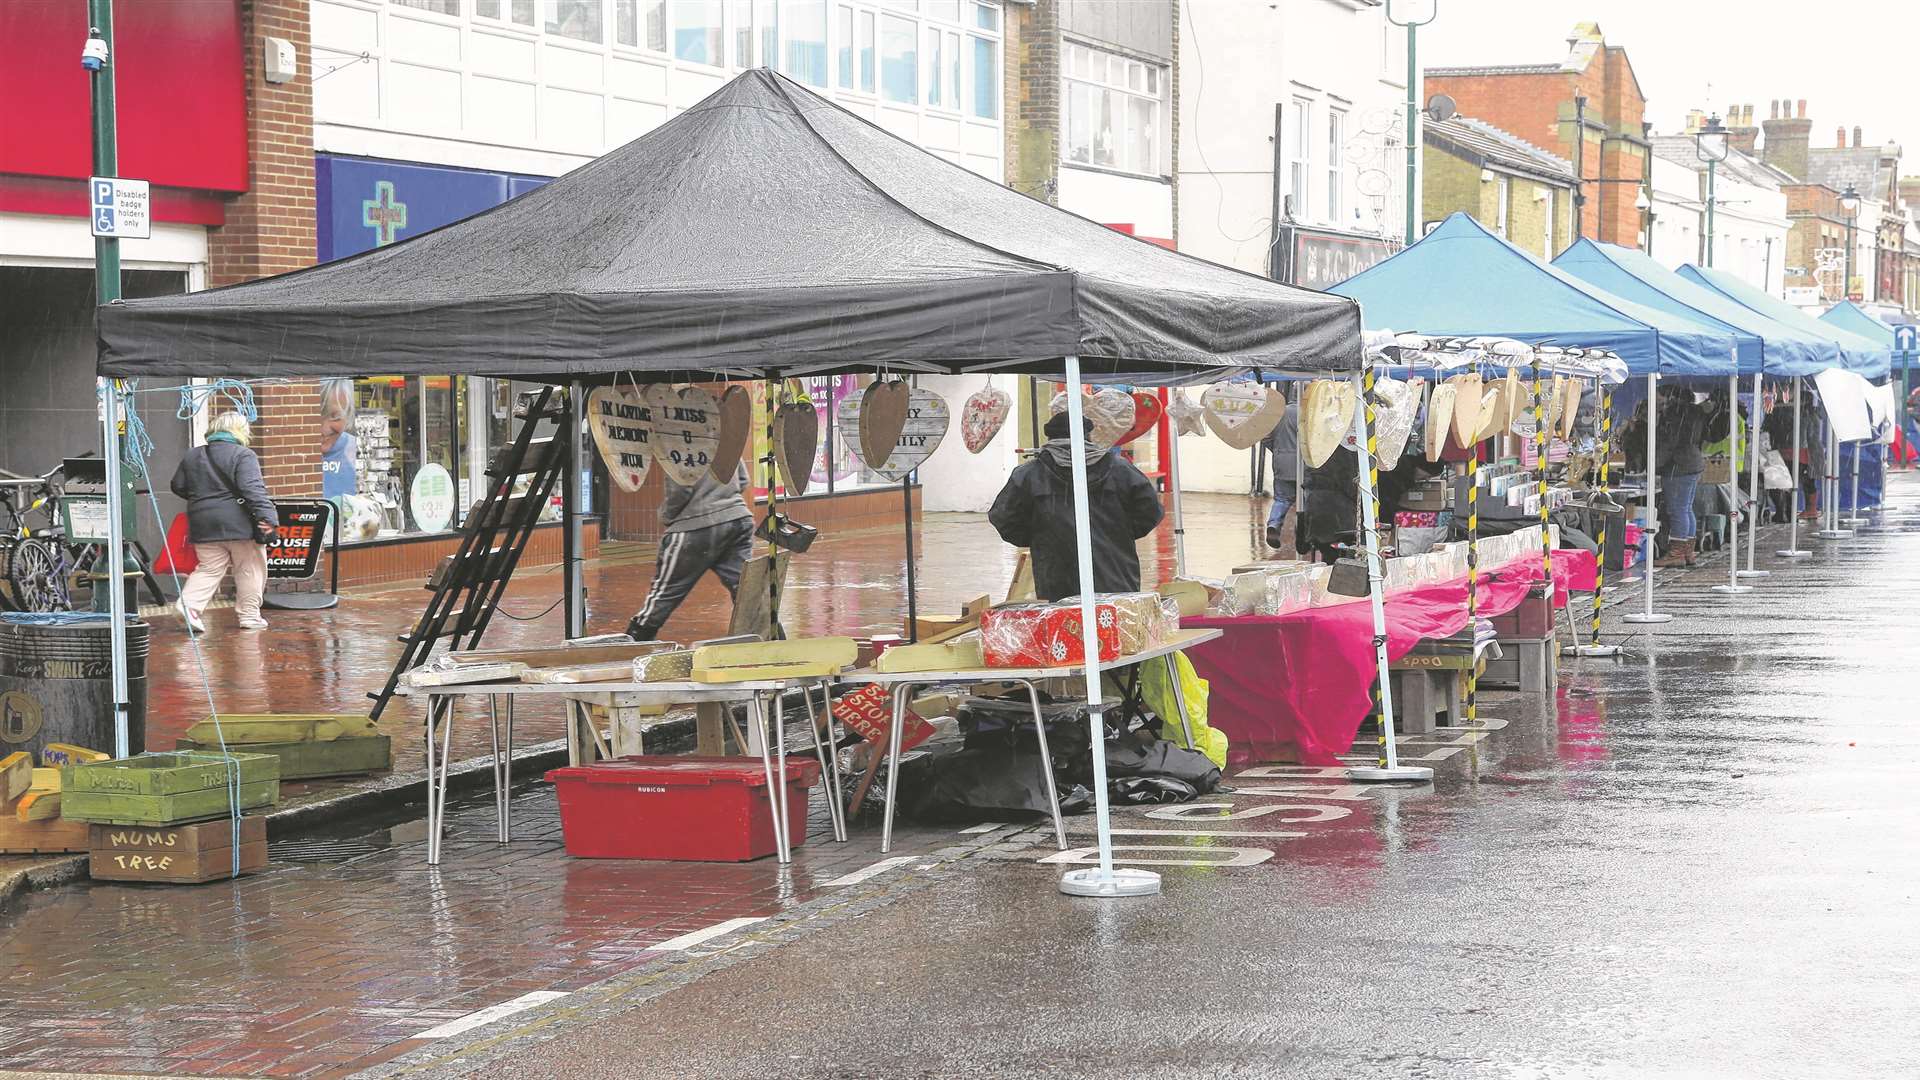 An artisan market held in Sittingbourne High Street